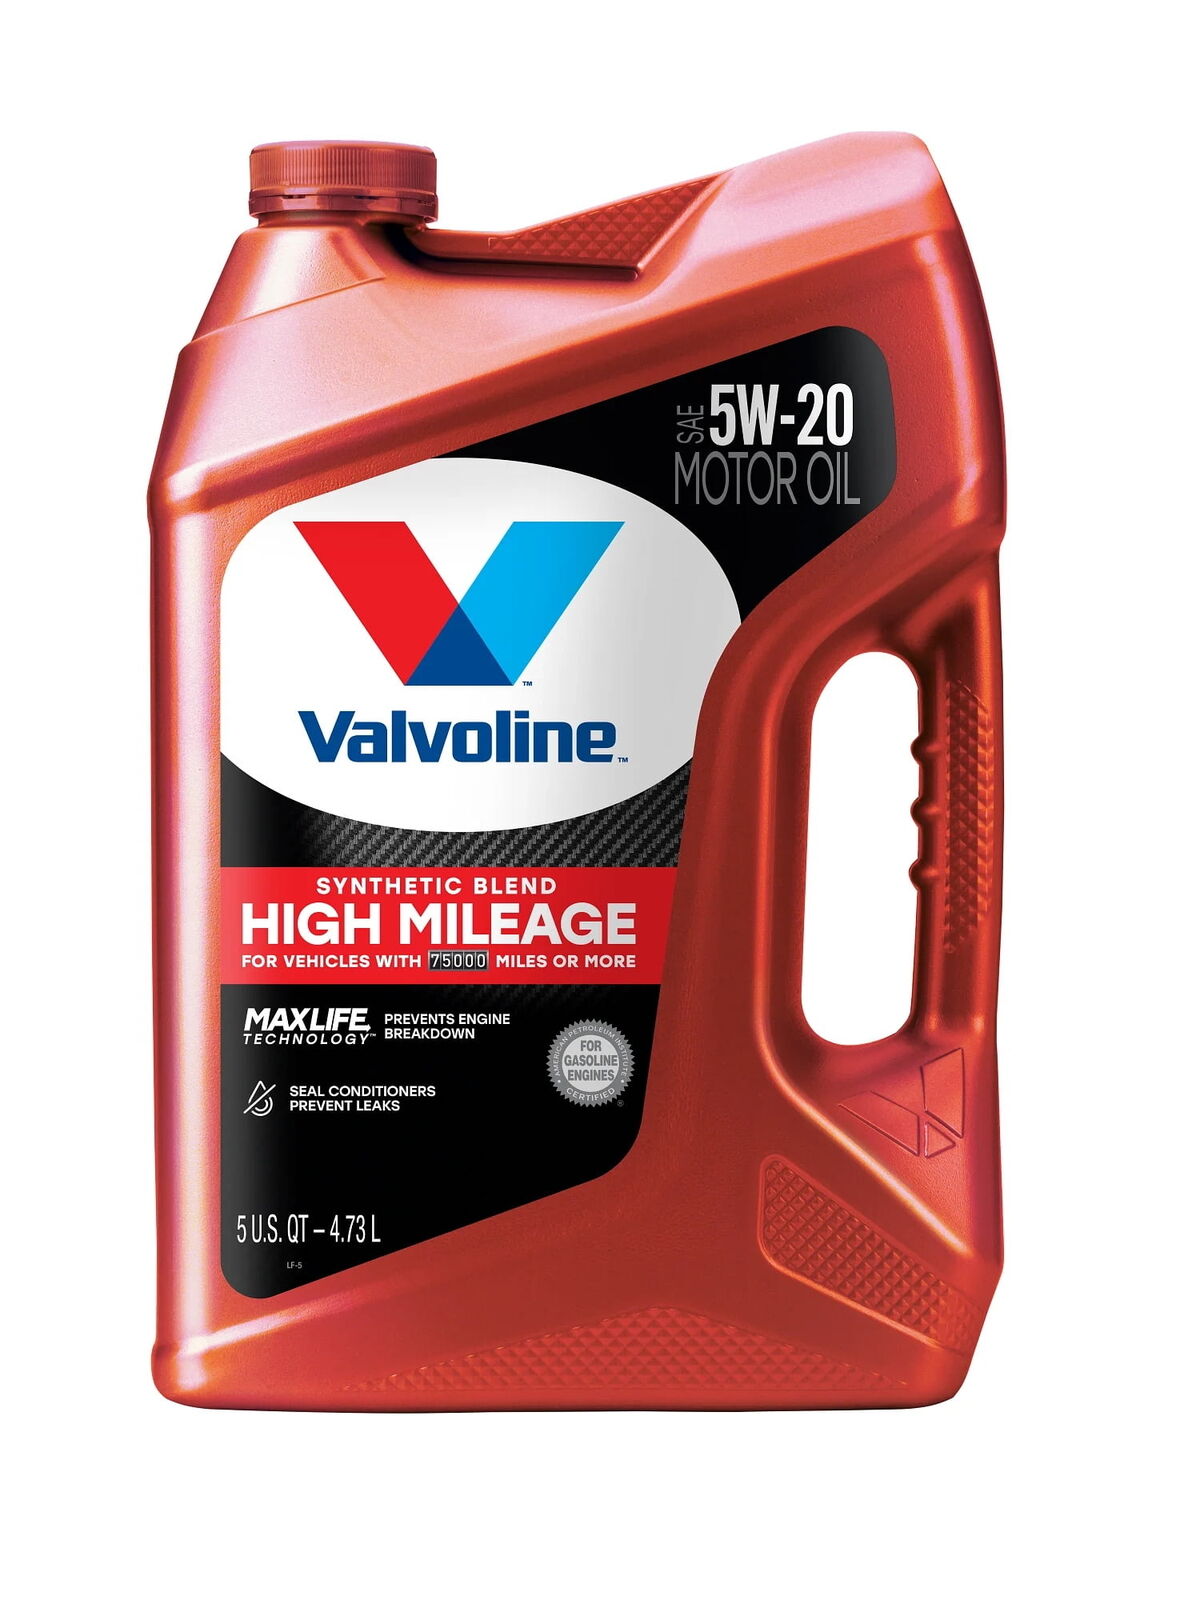 Valvoline High Mileage with MaxLife Technology Motor Oil SAE 5W-20